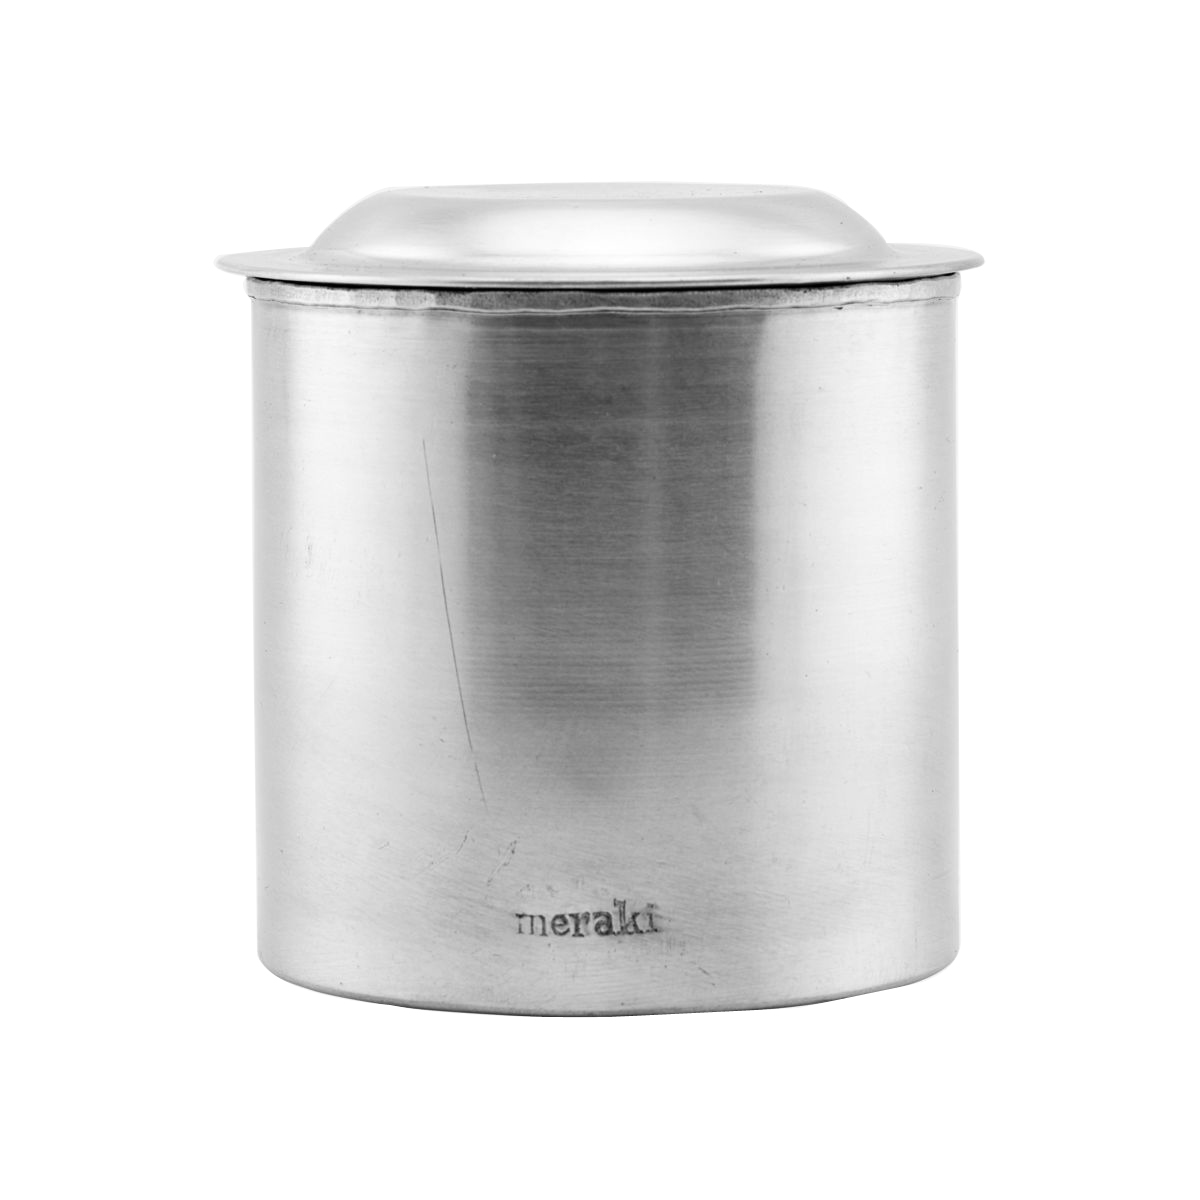 Meraki - Jar With Lid Large - Silver Finish (303820005)